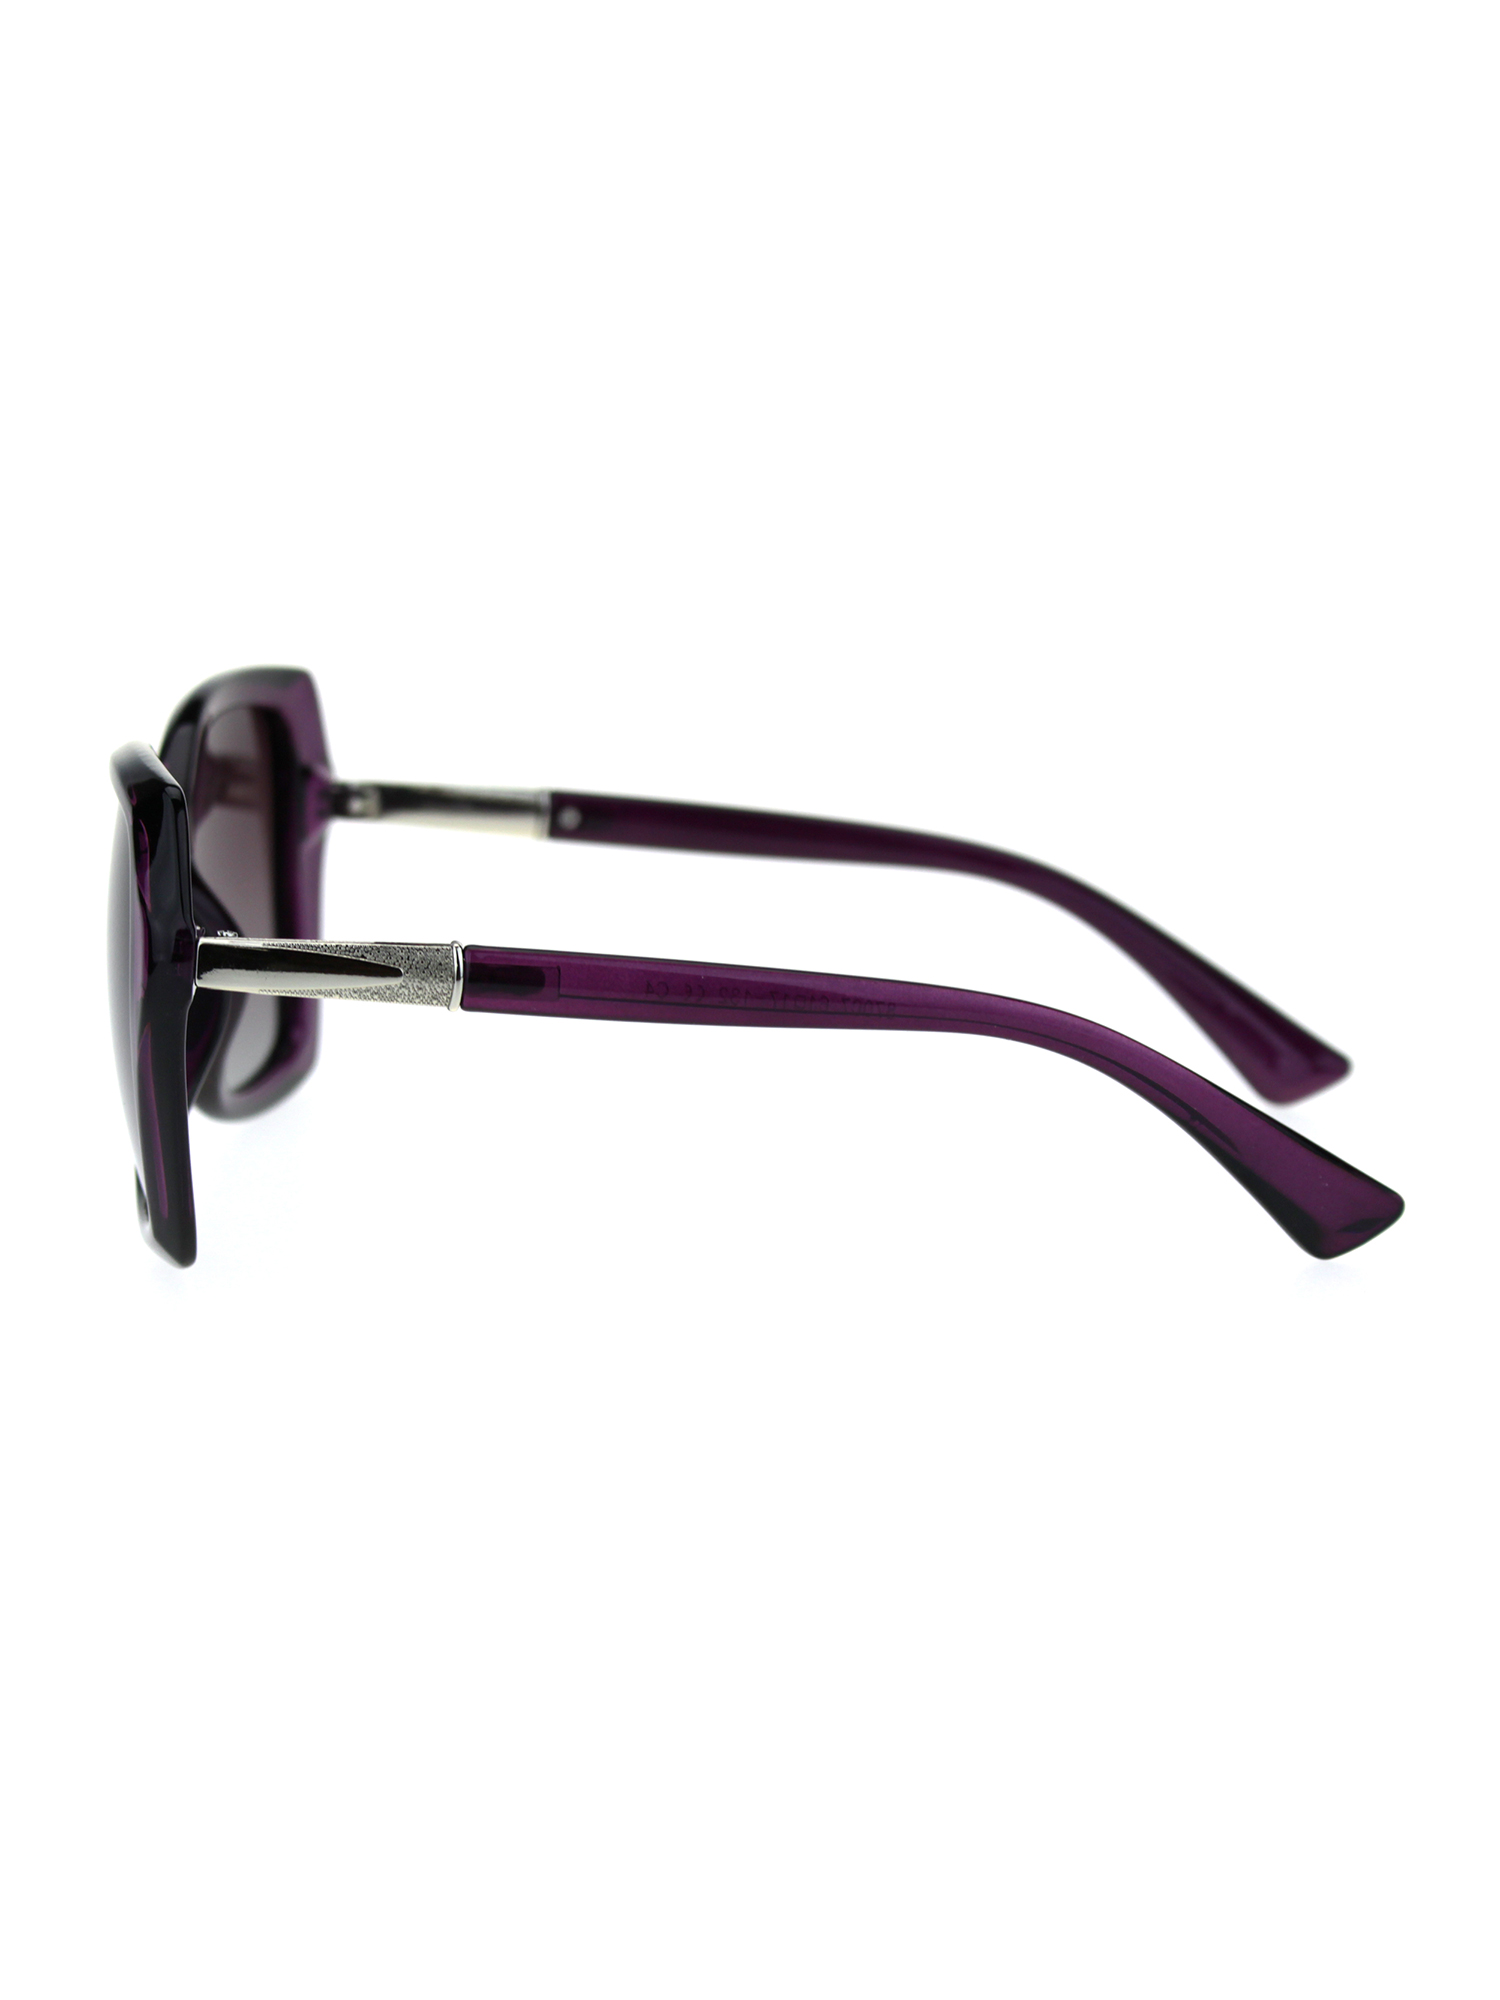 Womens CR39 Polarized Square Plastic Butterfly Designer Fashion Sunglasses All Purple - image 3 of 4